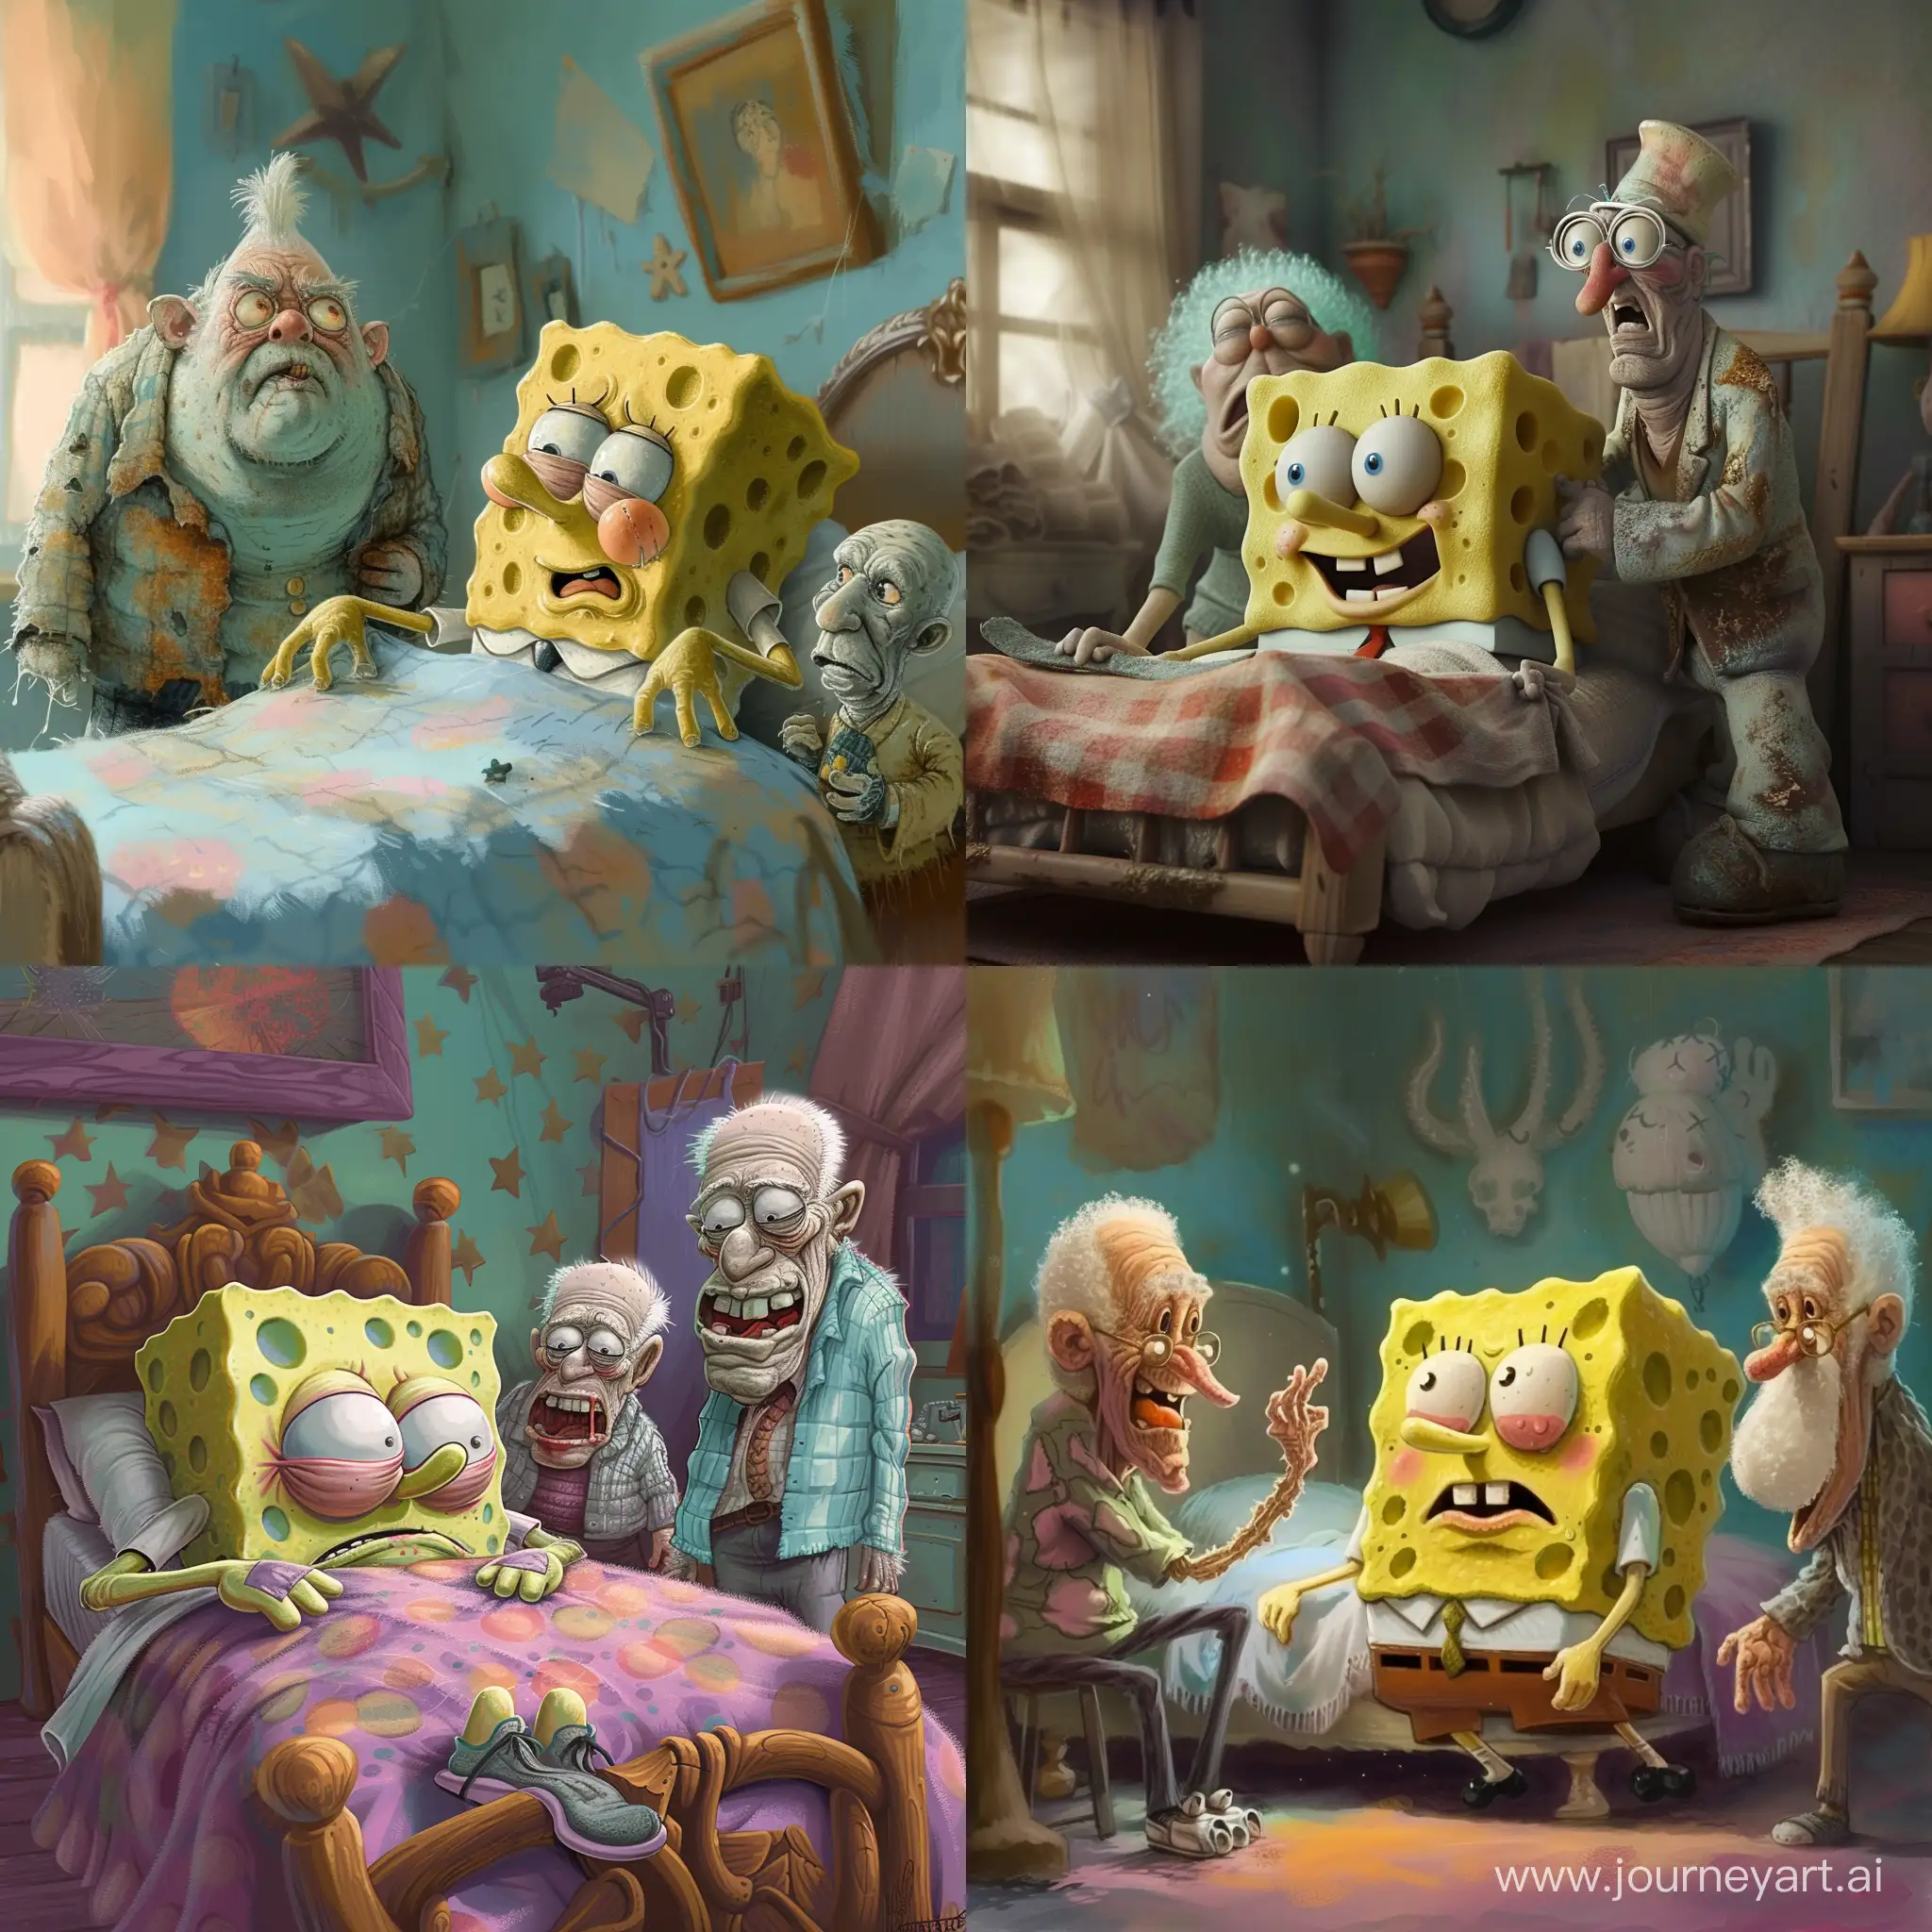 Create an image of an elderly, weak spongebob squarepants bedbound, as his elderly patrick and squidward friends watch him.